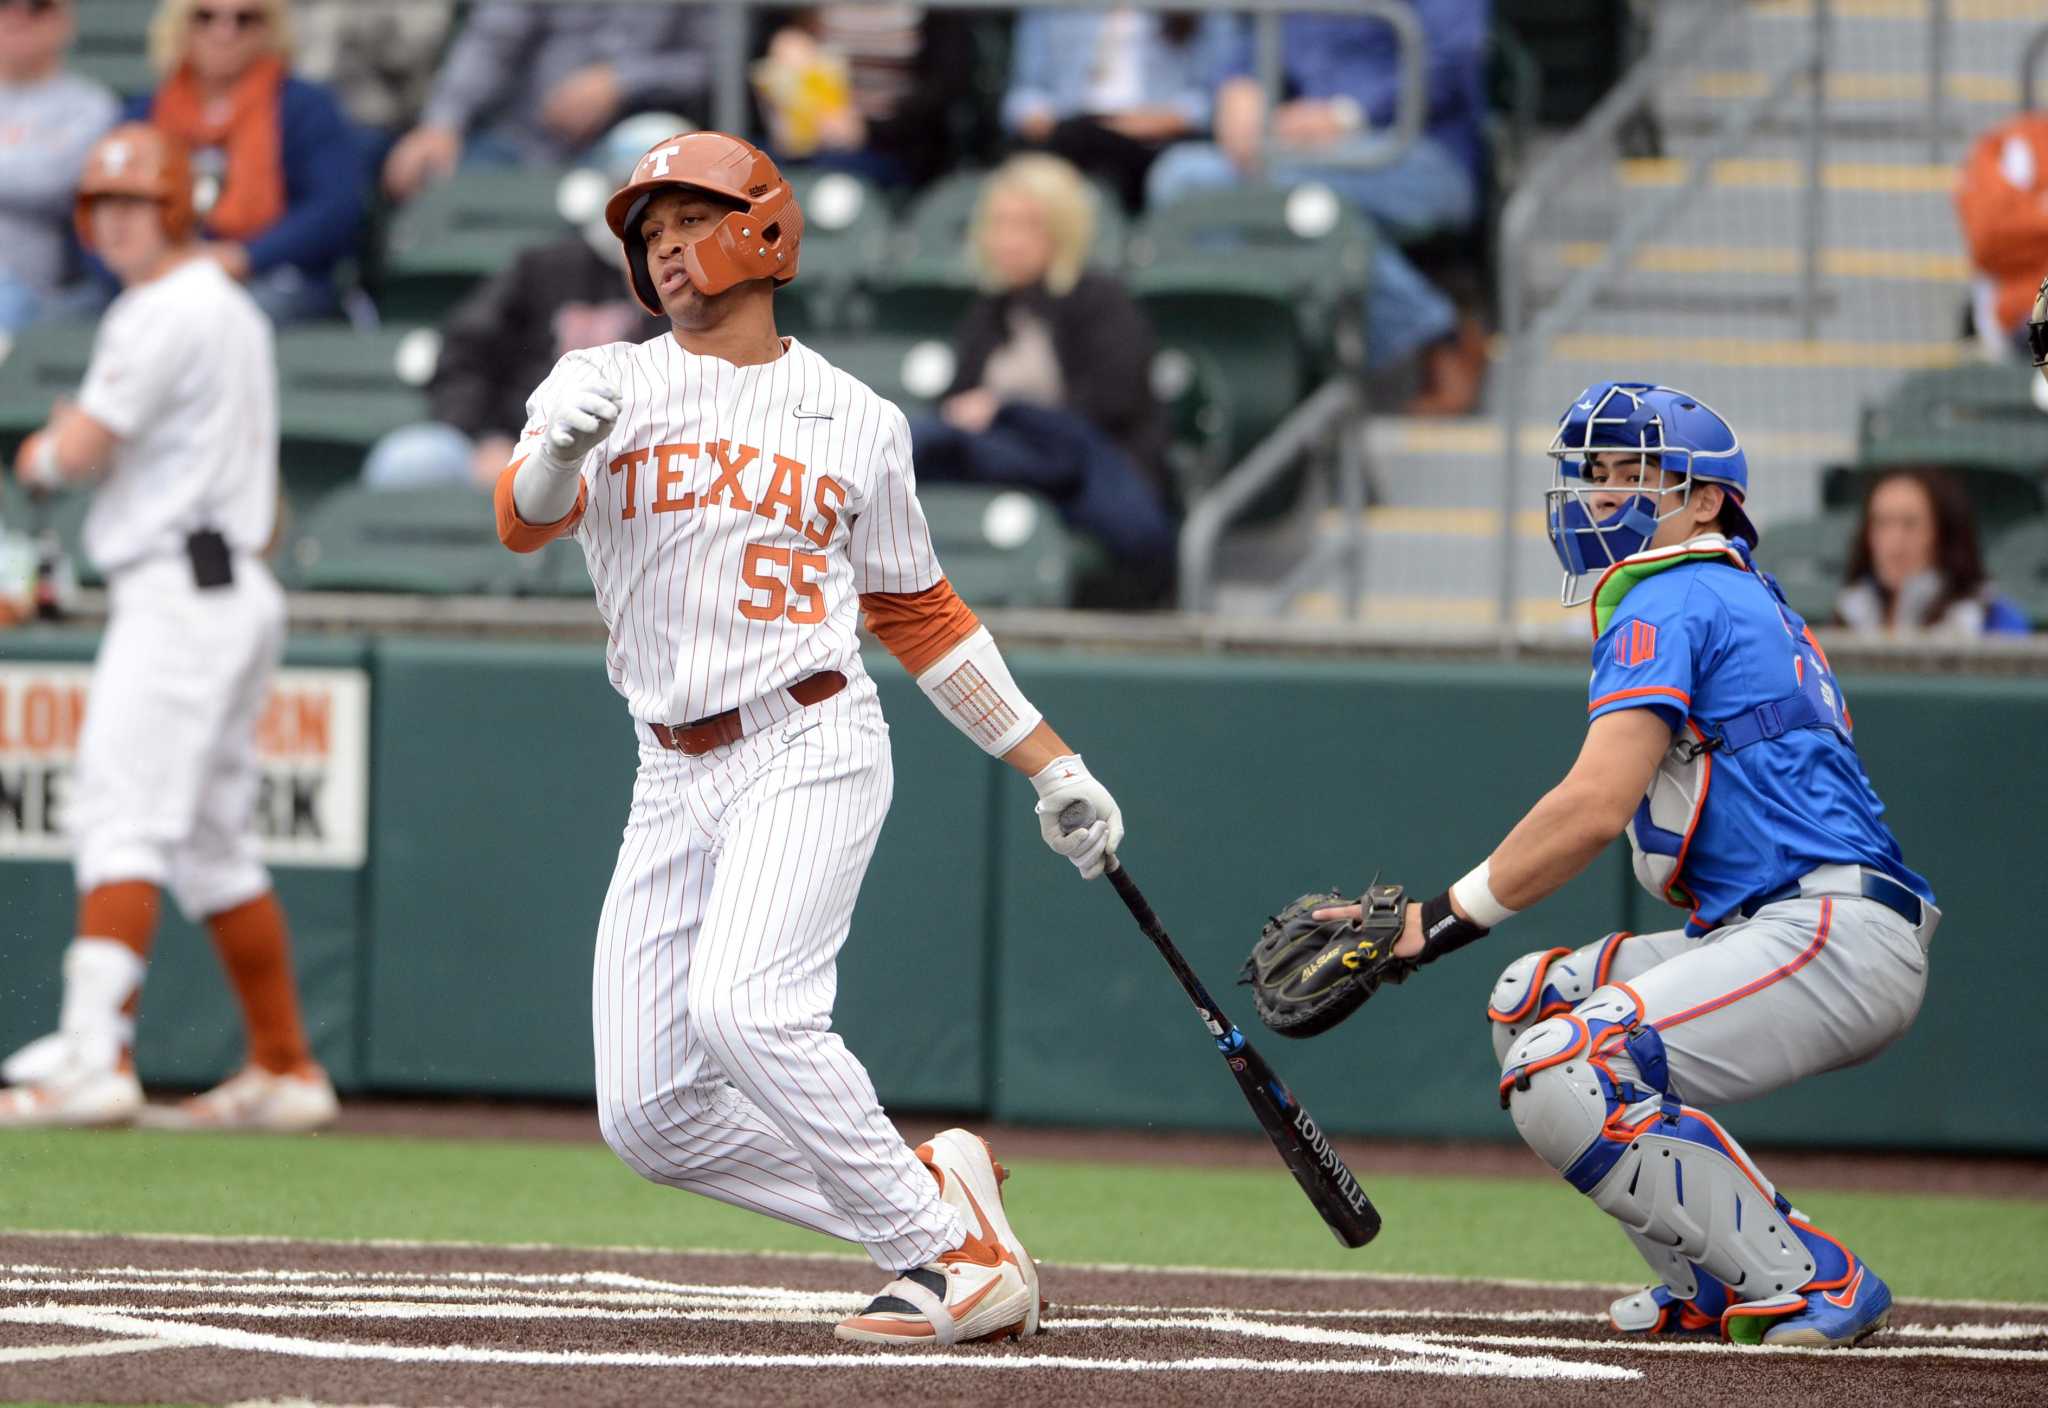 Murphy Stehly - Baseball - University of Texas Athletics